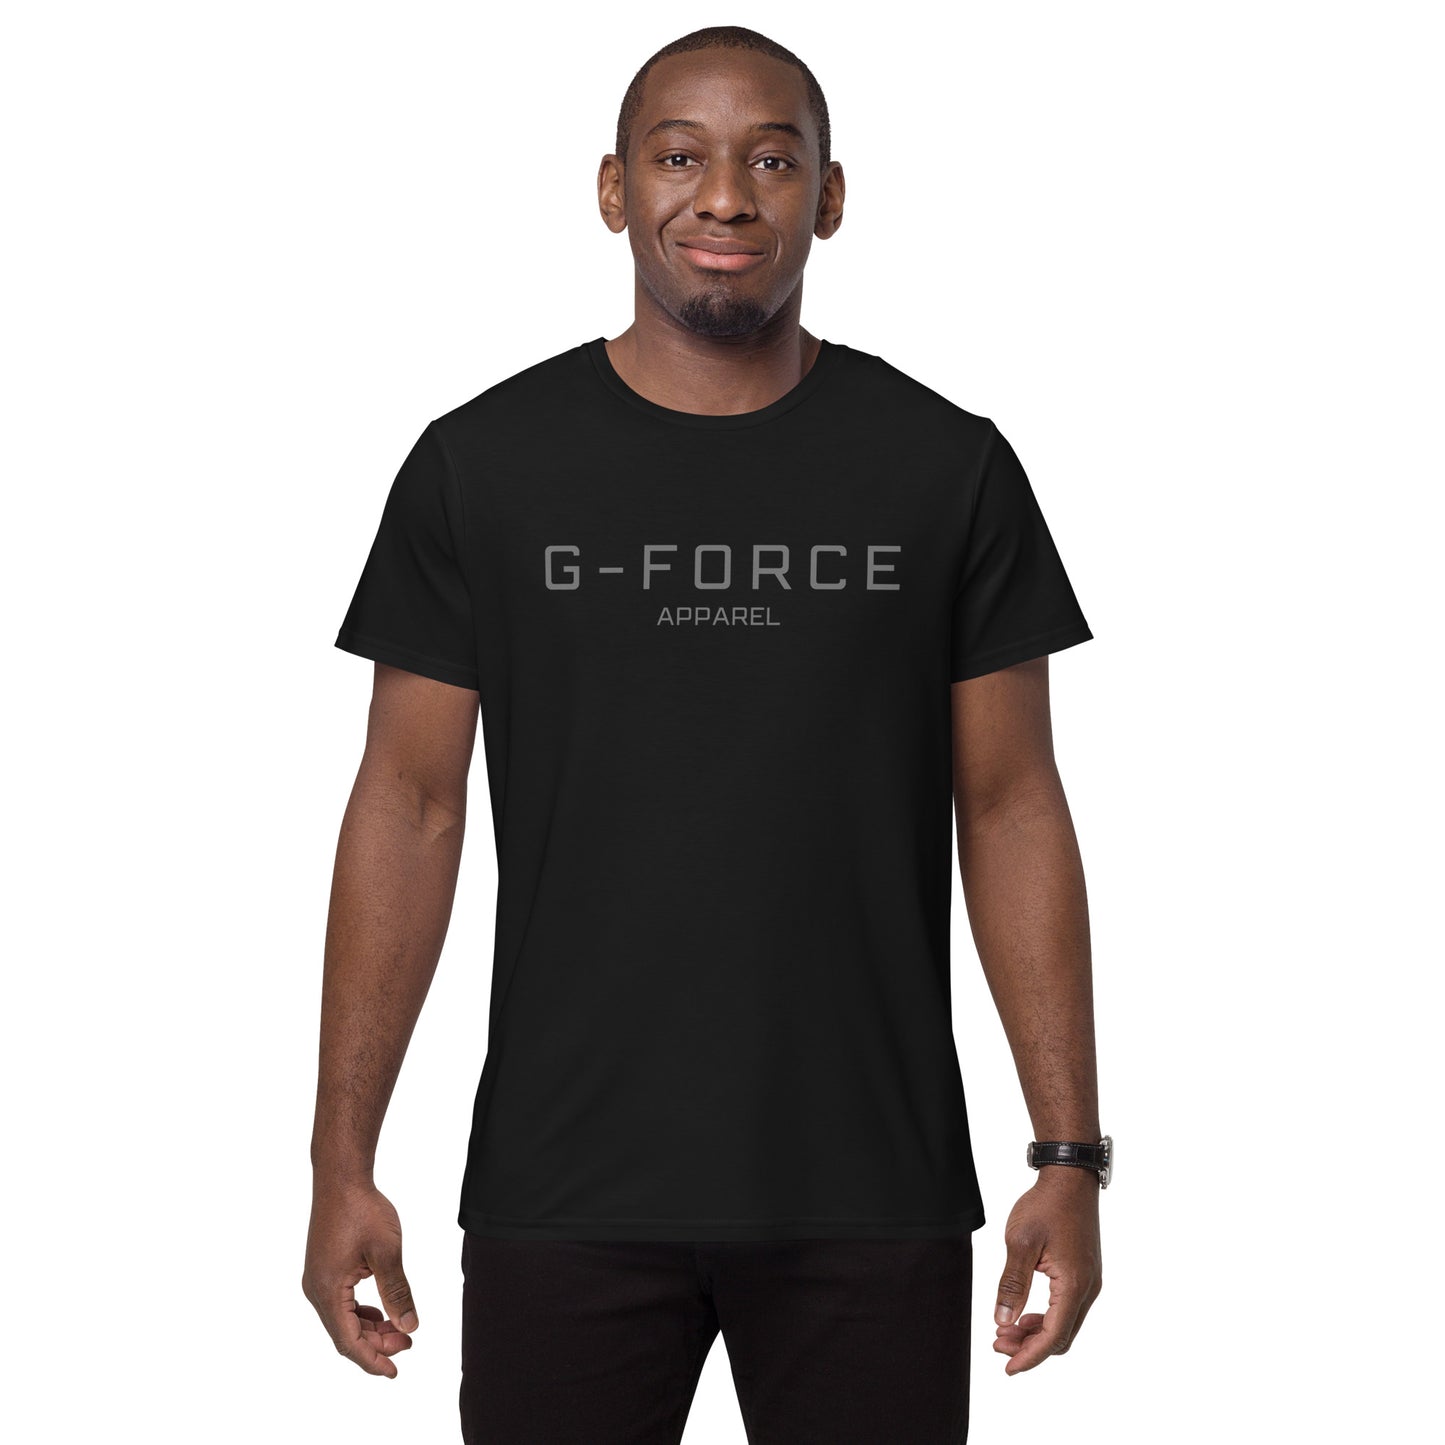 G-FORCE APPAREL Premium GB t-shirt